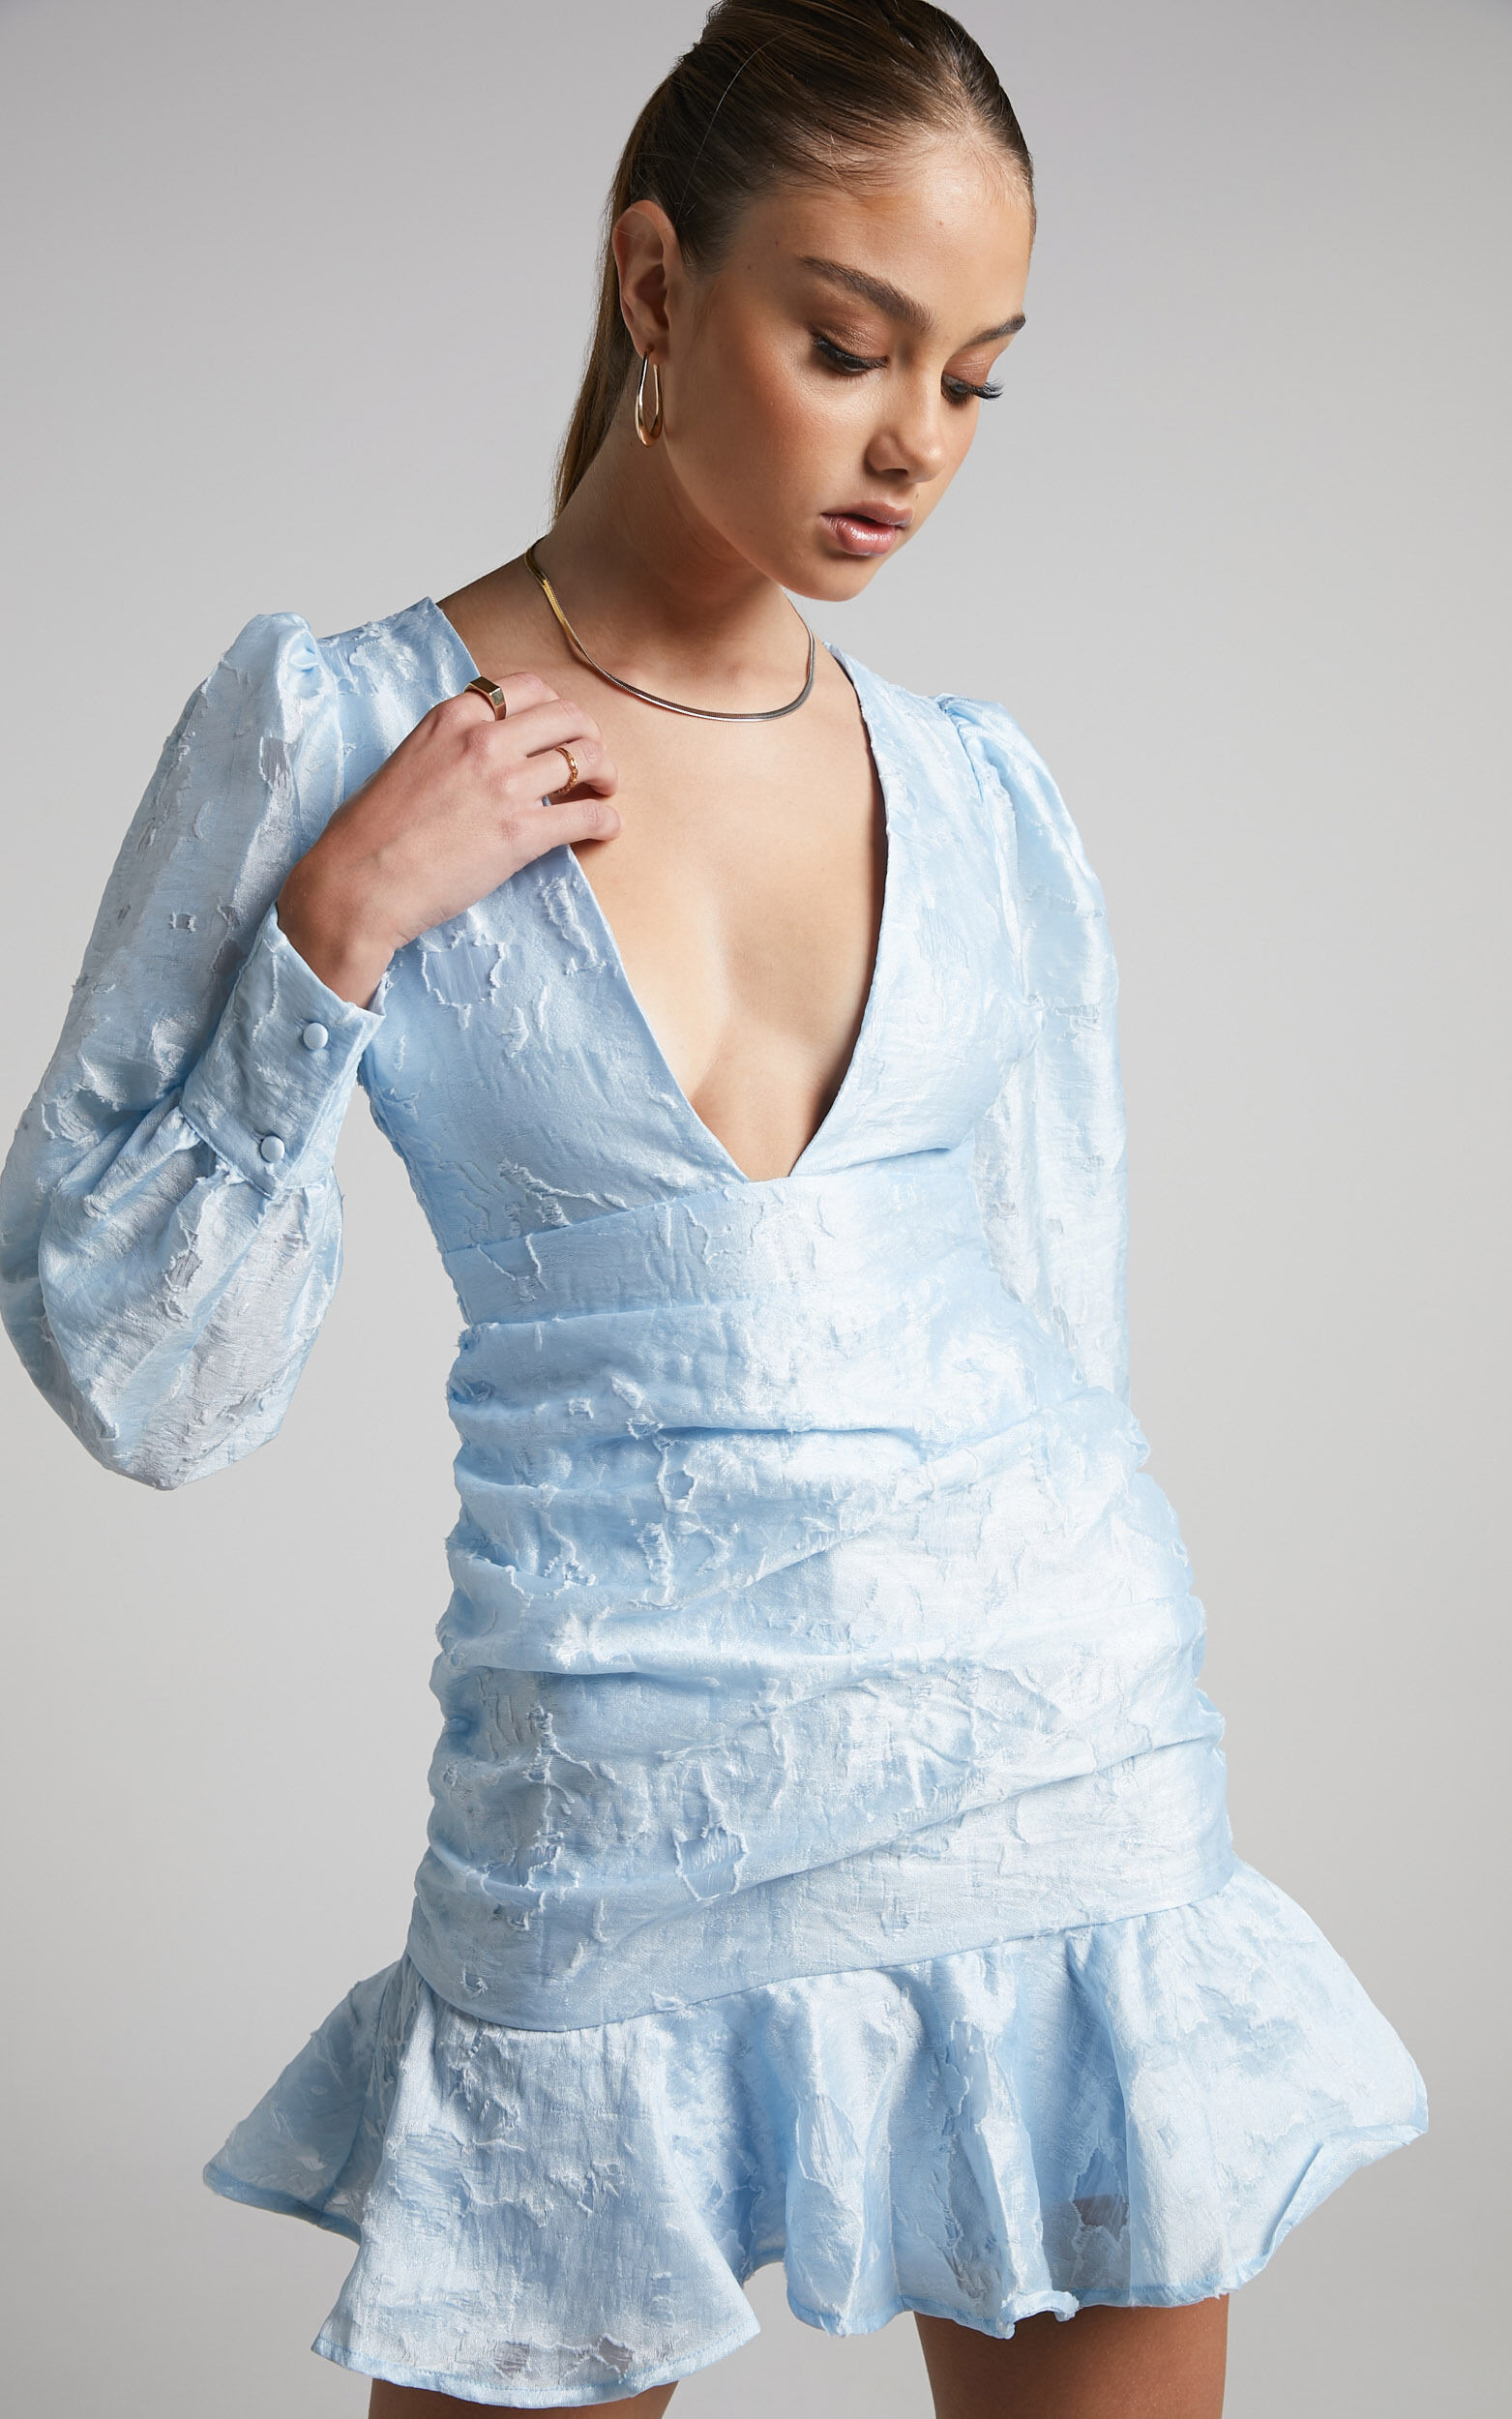 Baxia Mini Dress - Textured Balloon Sleeve Dress in Light Blue - 04, BLU1